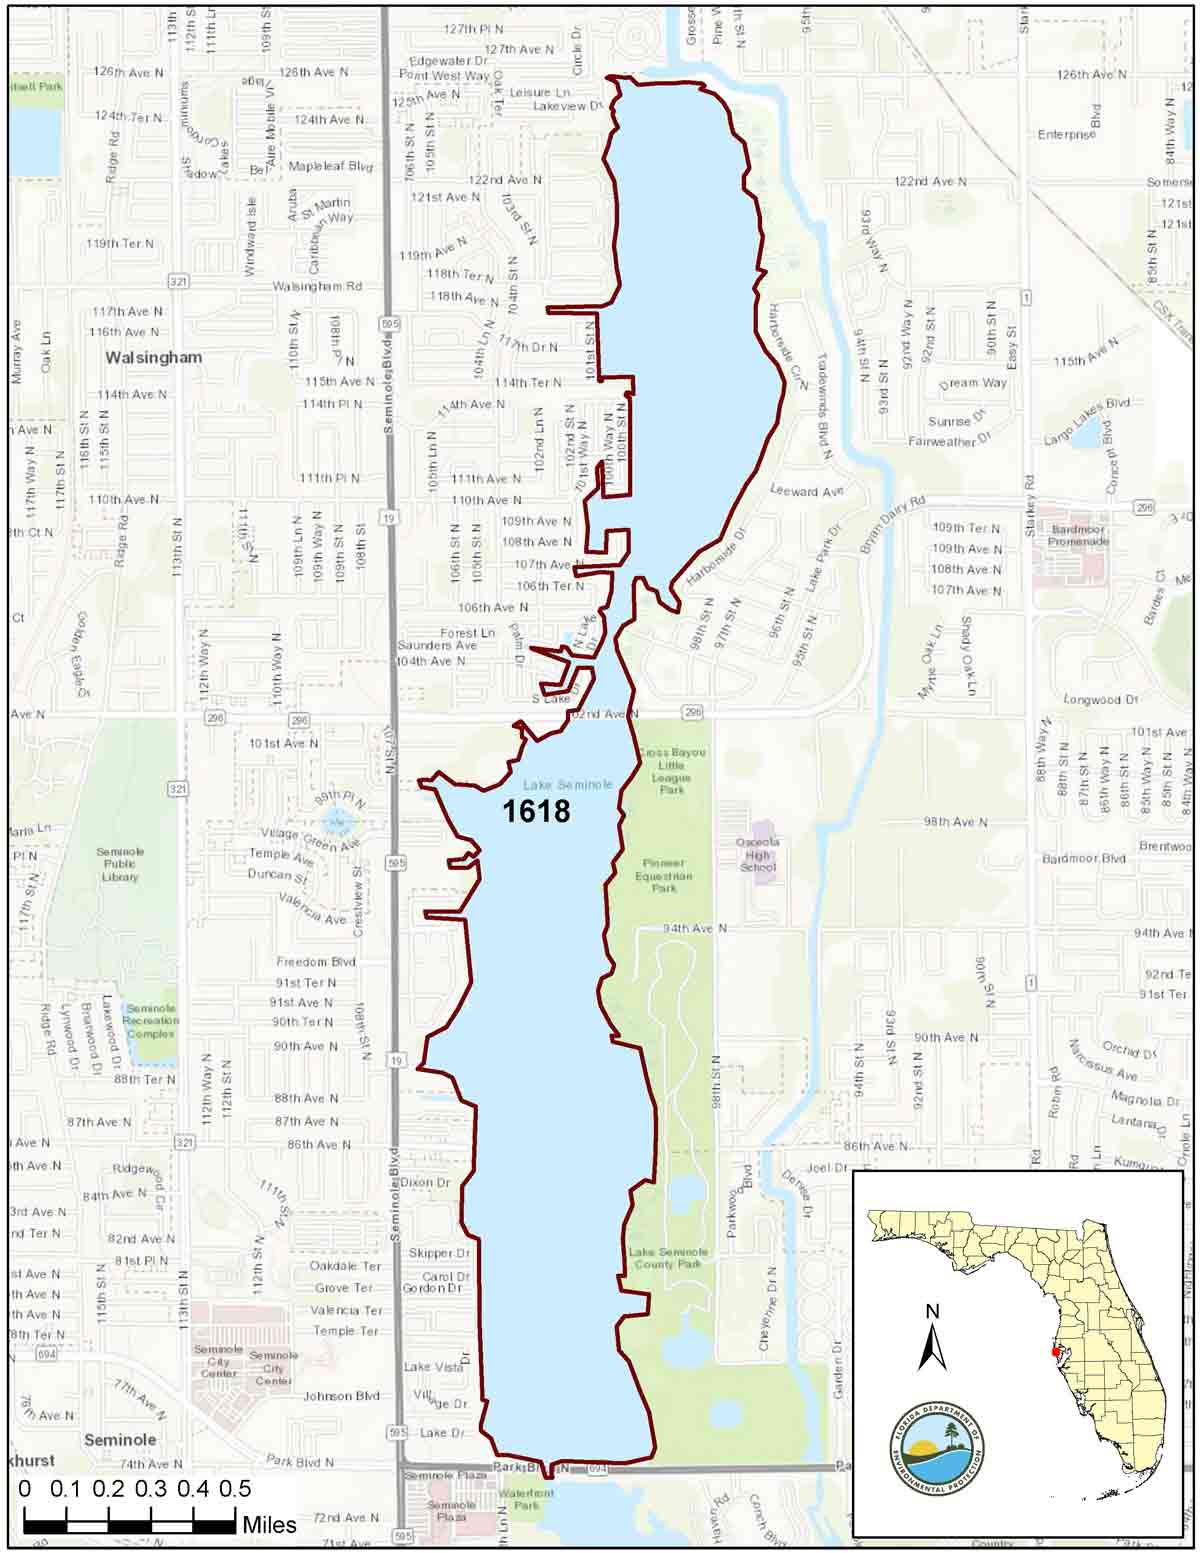 Map of WBID boundaries included in the Lake Seminole alternative restoration plan